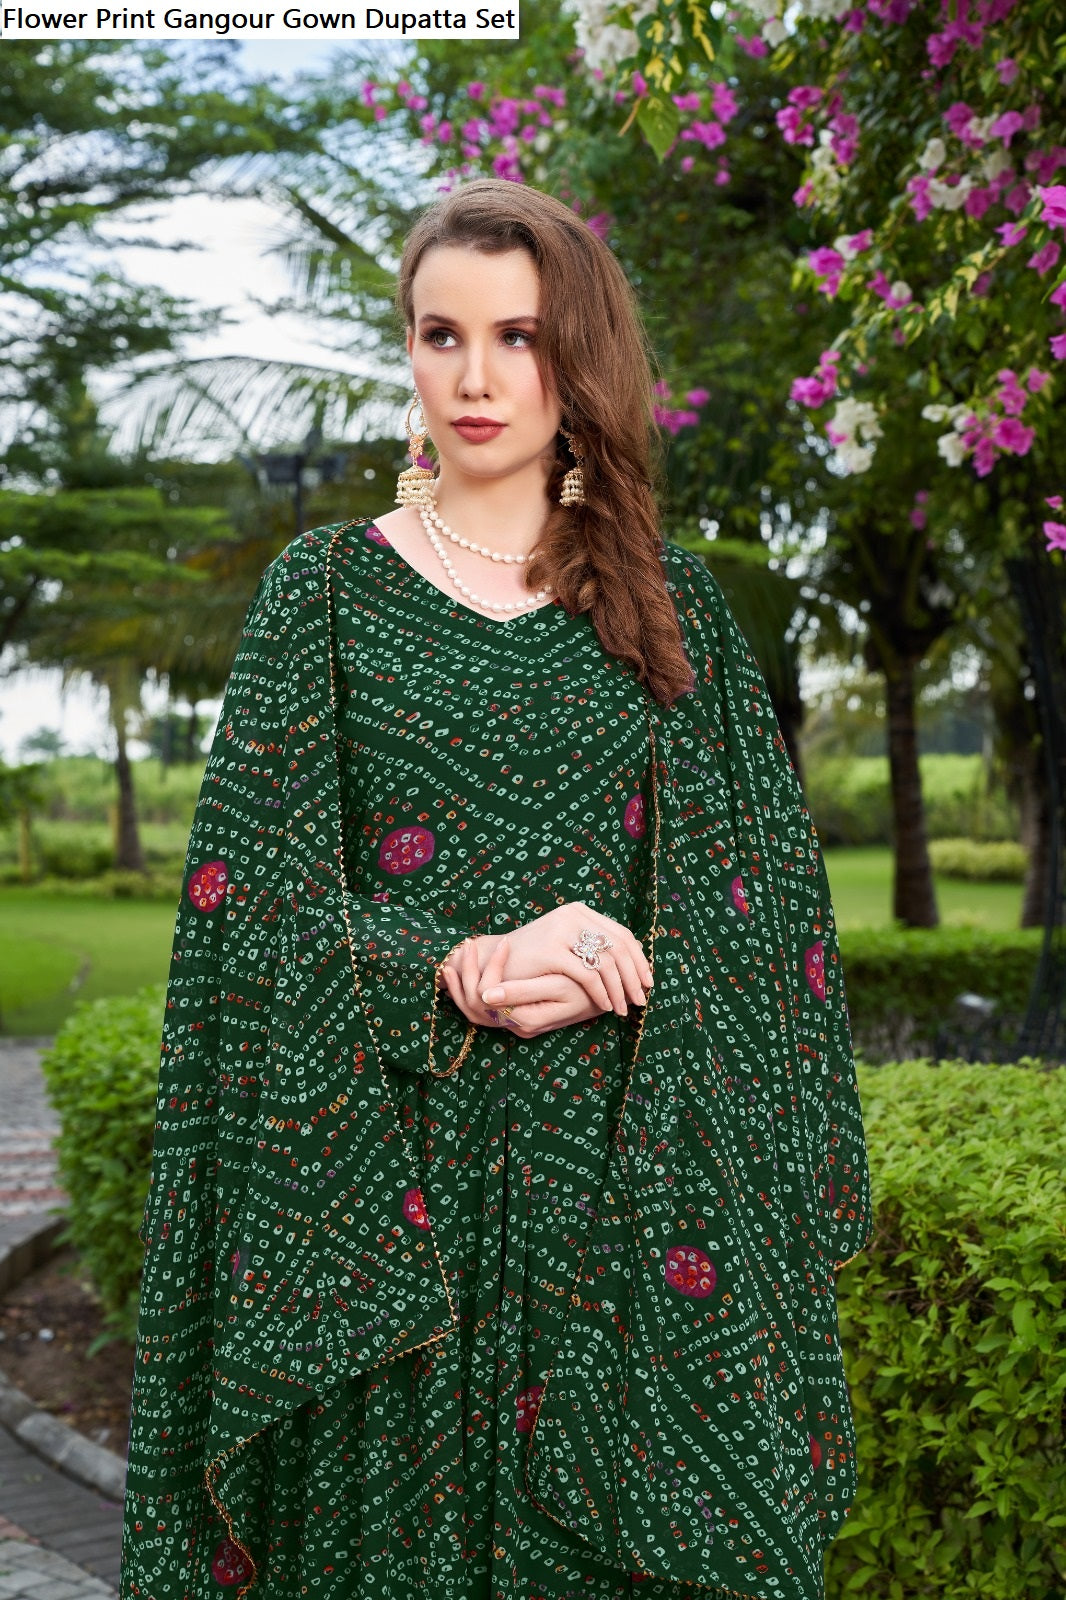 Flower Print Gangour Gown Dupatta Set